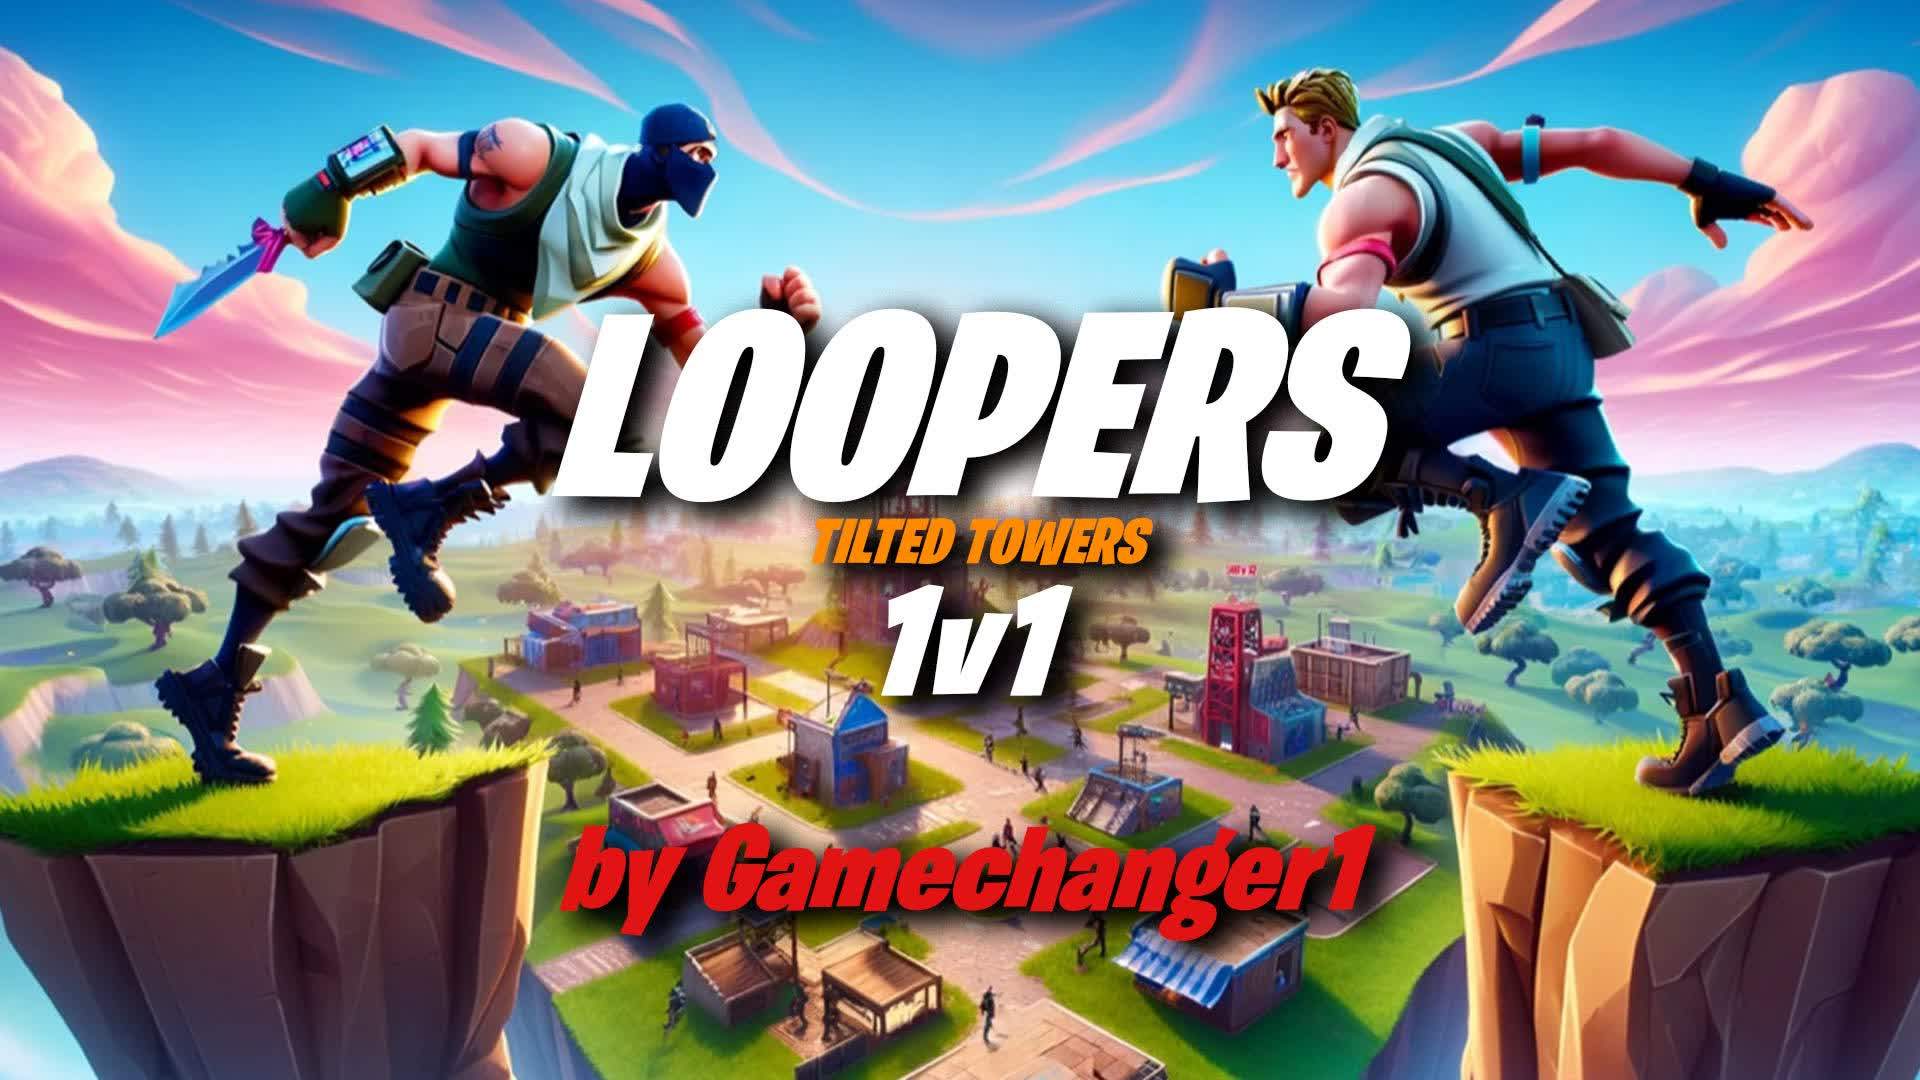 LOOPERS 1V1 (by Gamechanger1)